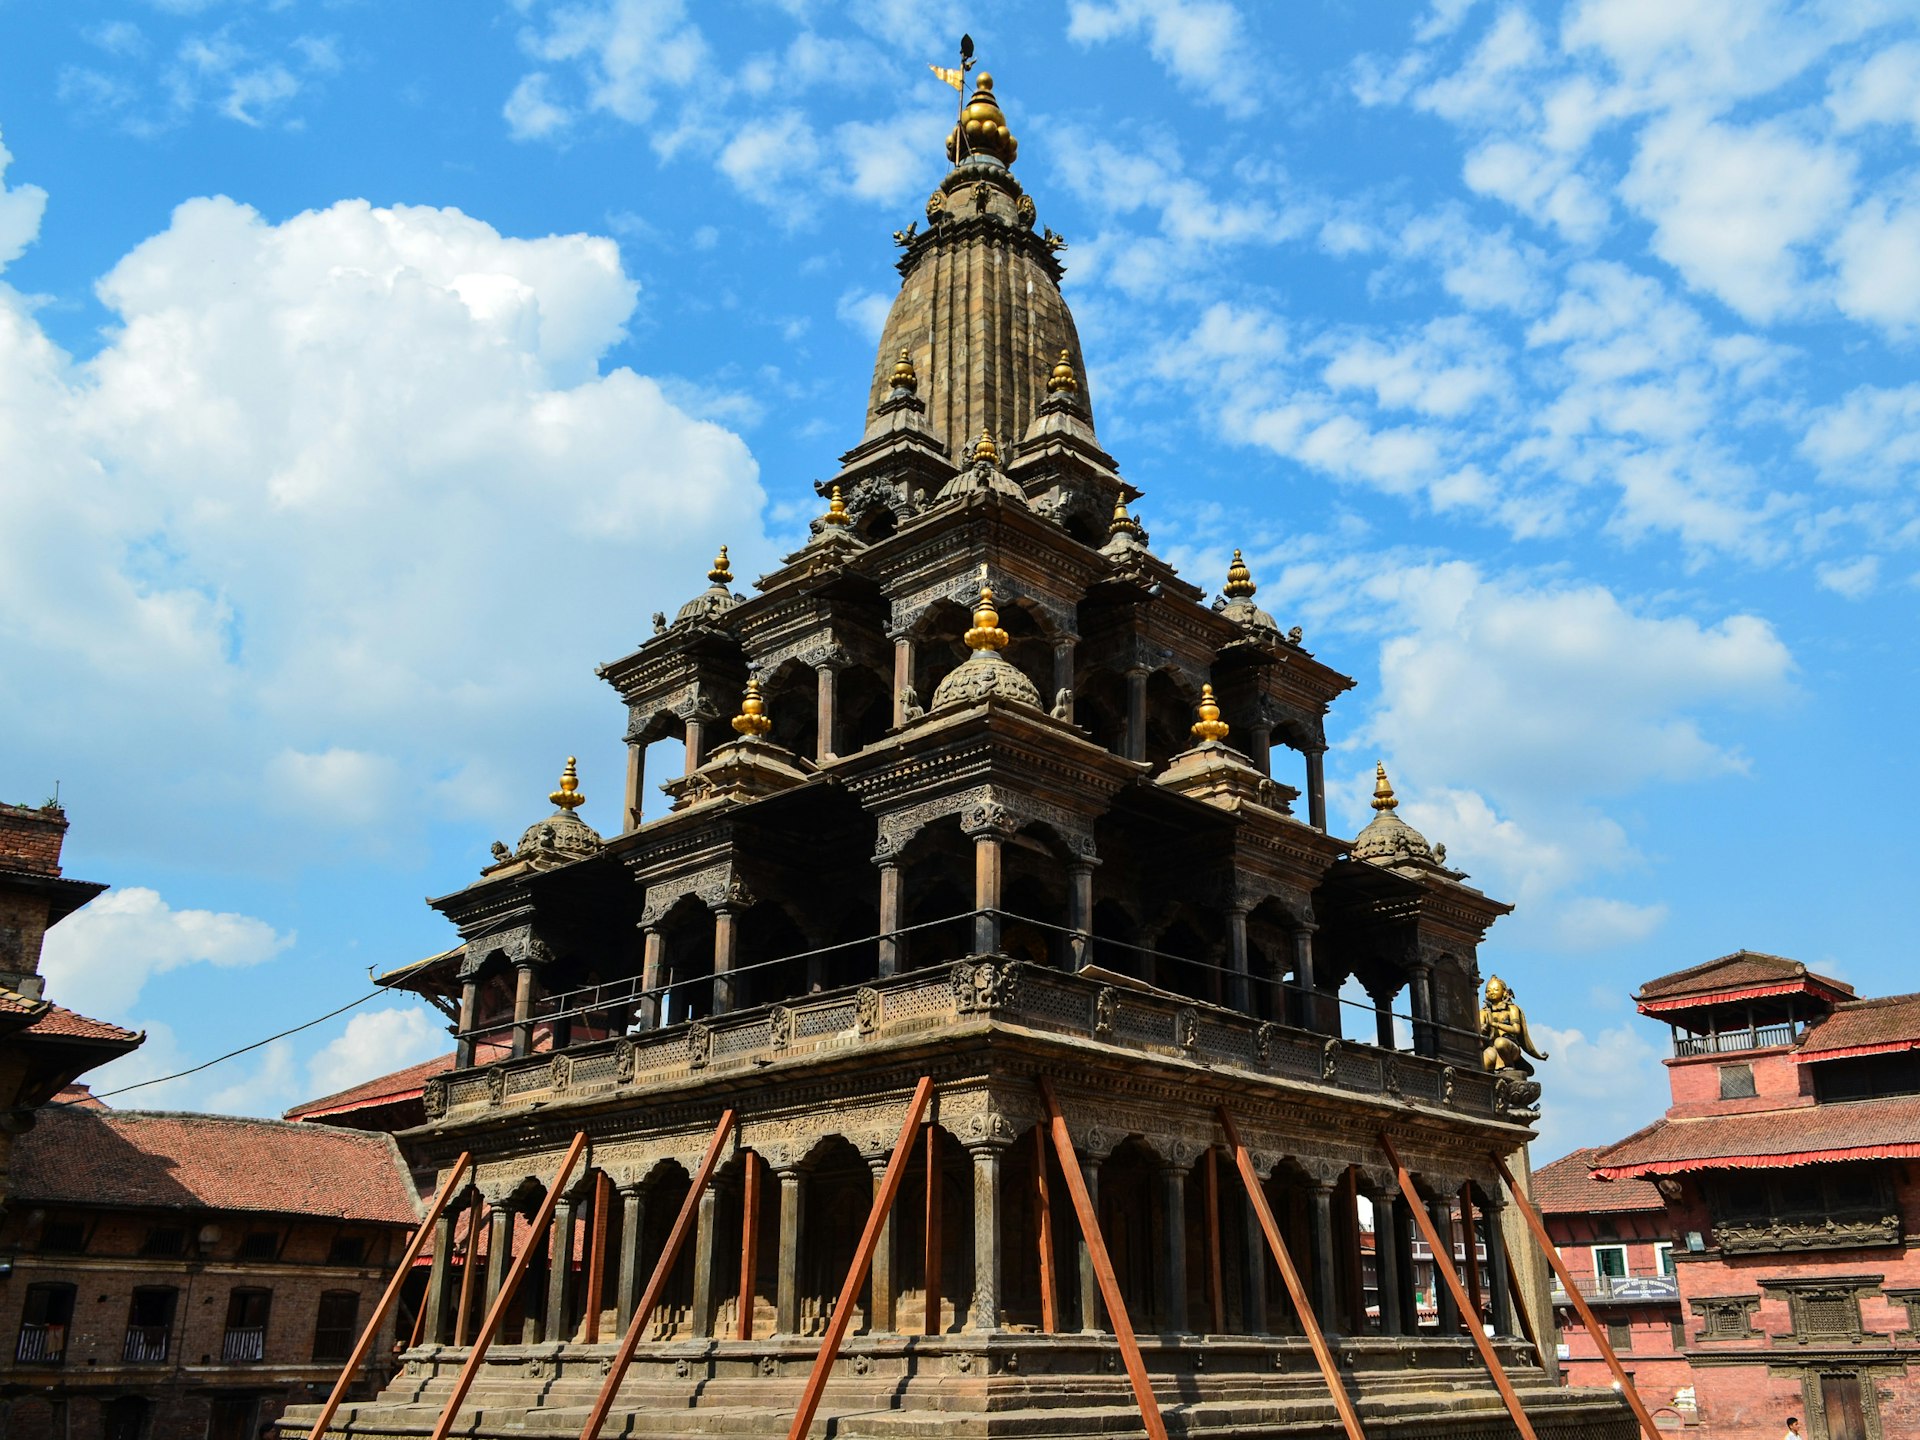 Patan's Krishna Temple with structural reinforcement. Image by René C. Nielsen / CC By 2.0 SA